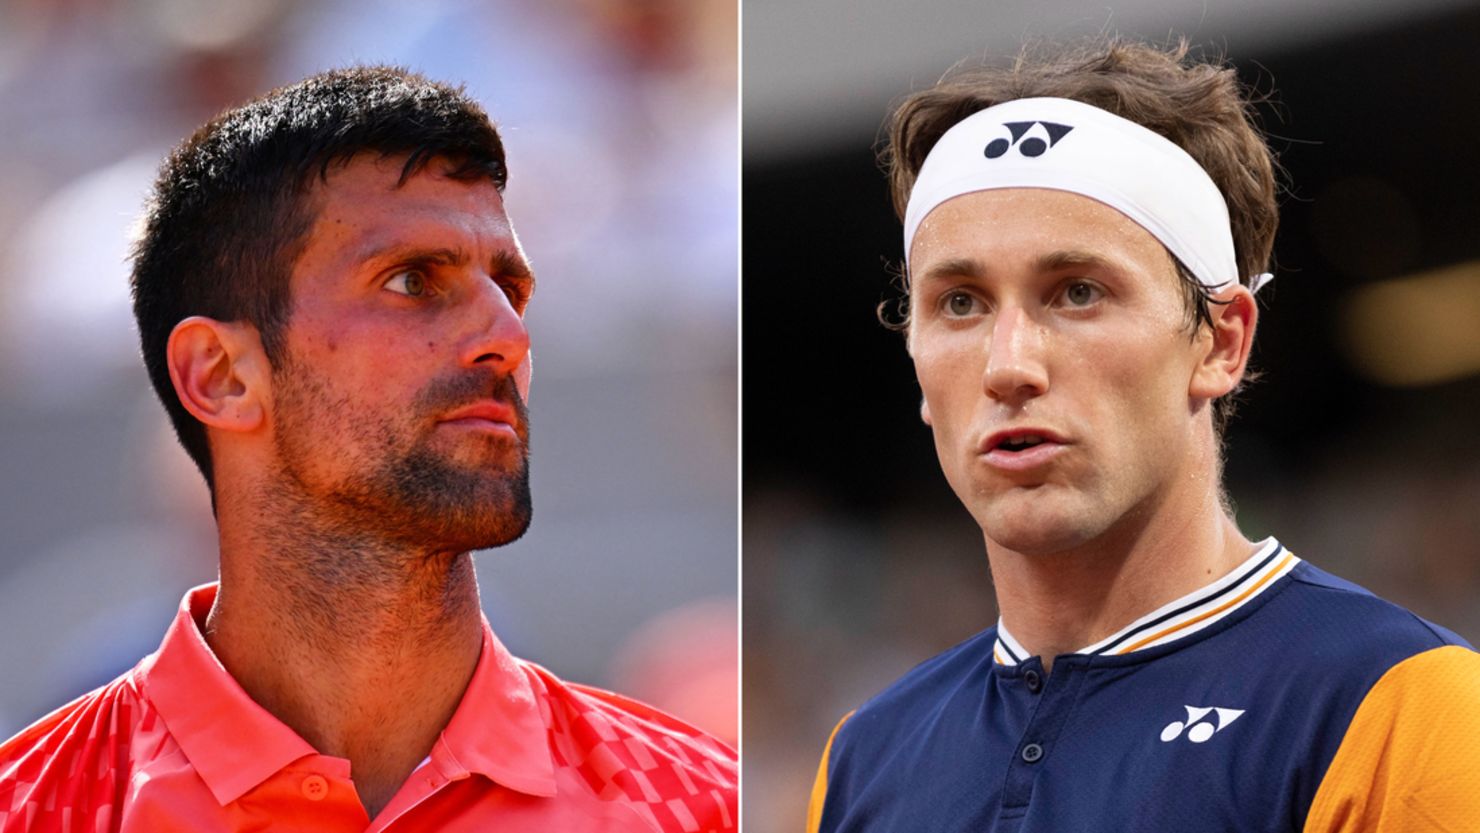 Novak Djokovic will face Casper Ruud in the French Open final.